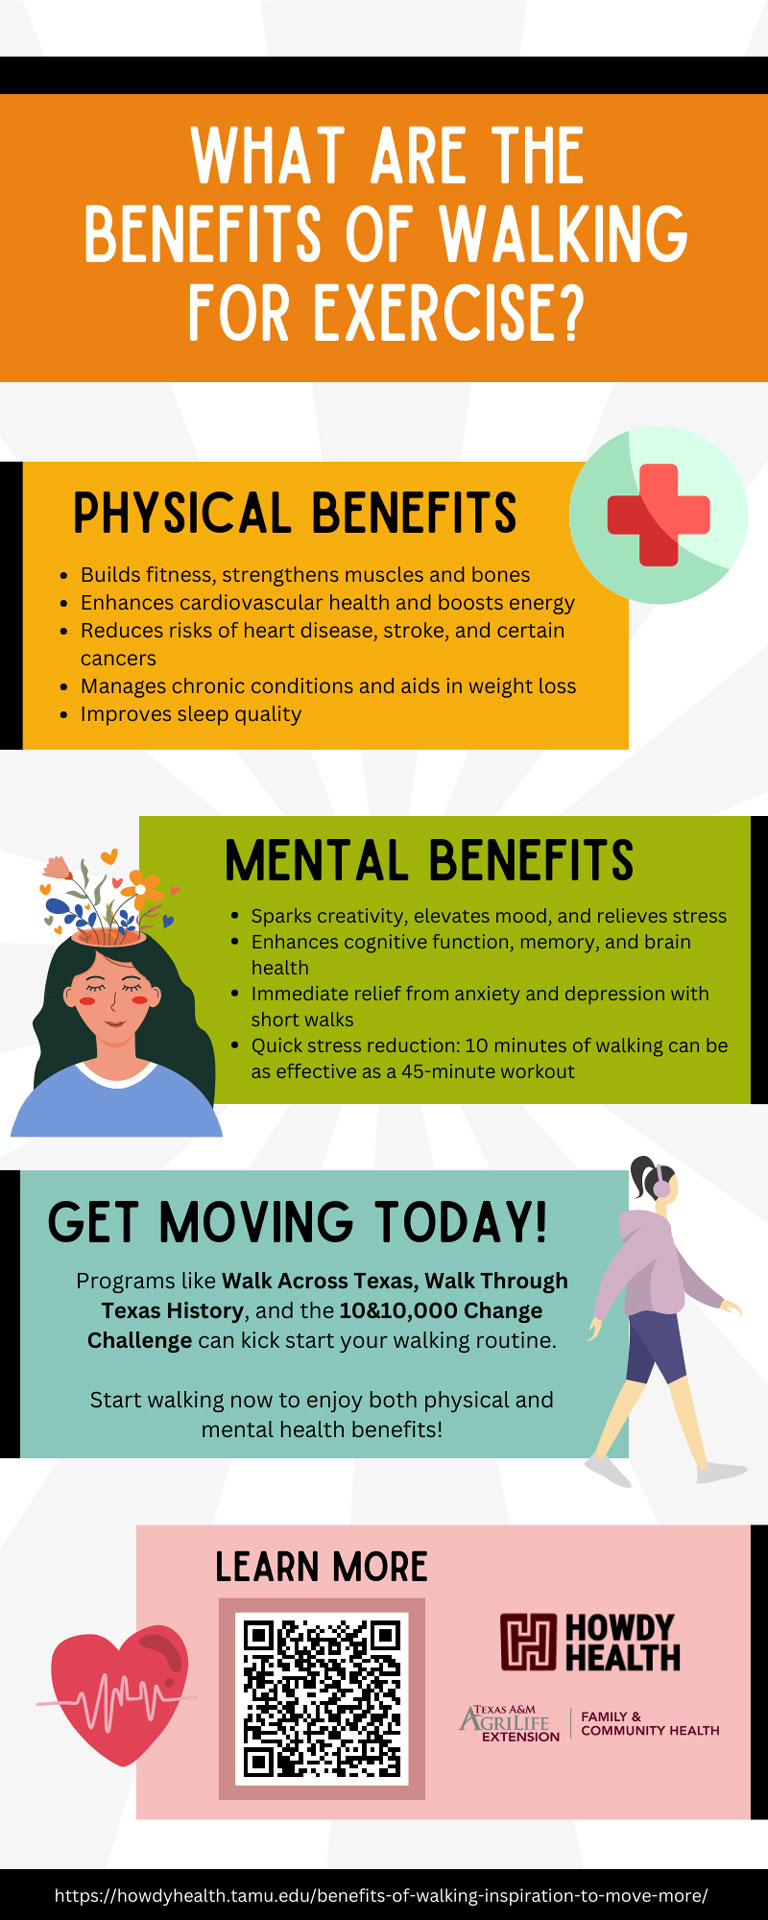 7 benefits of walking - Reviewed